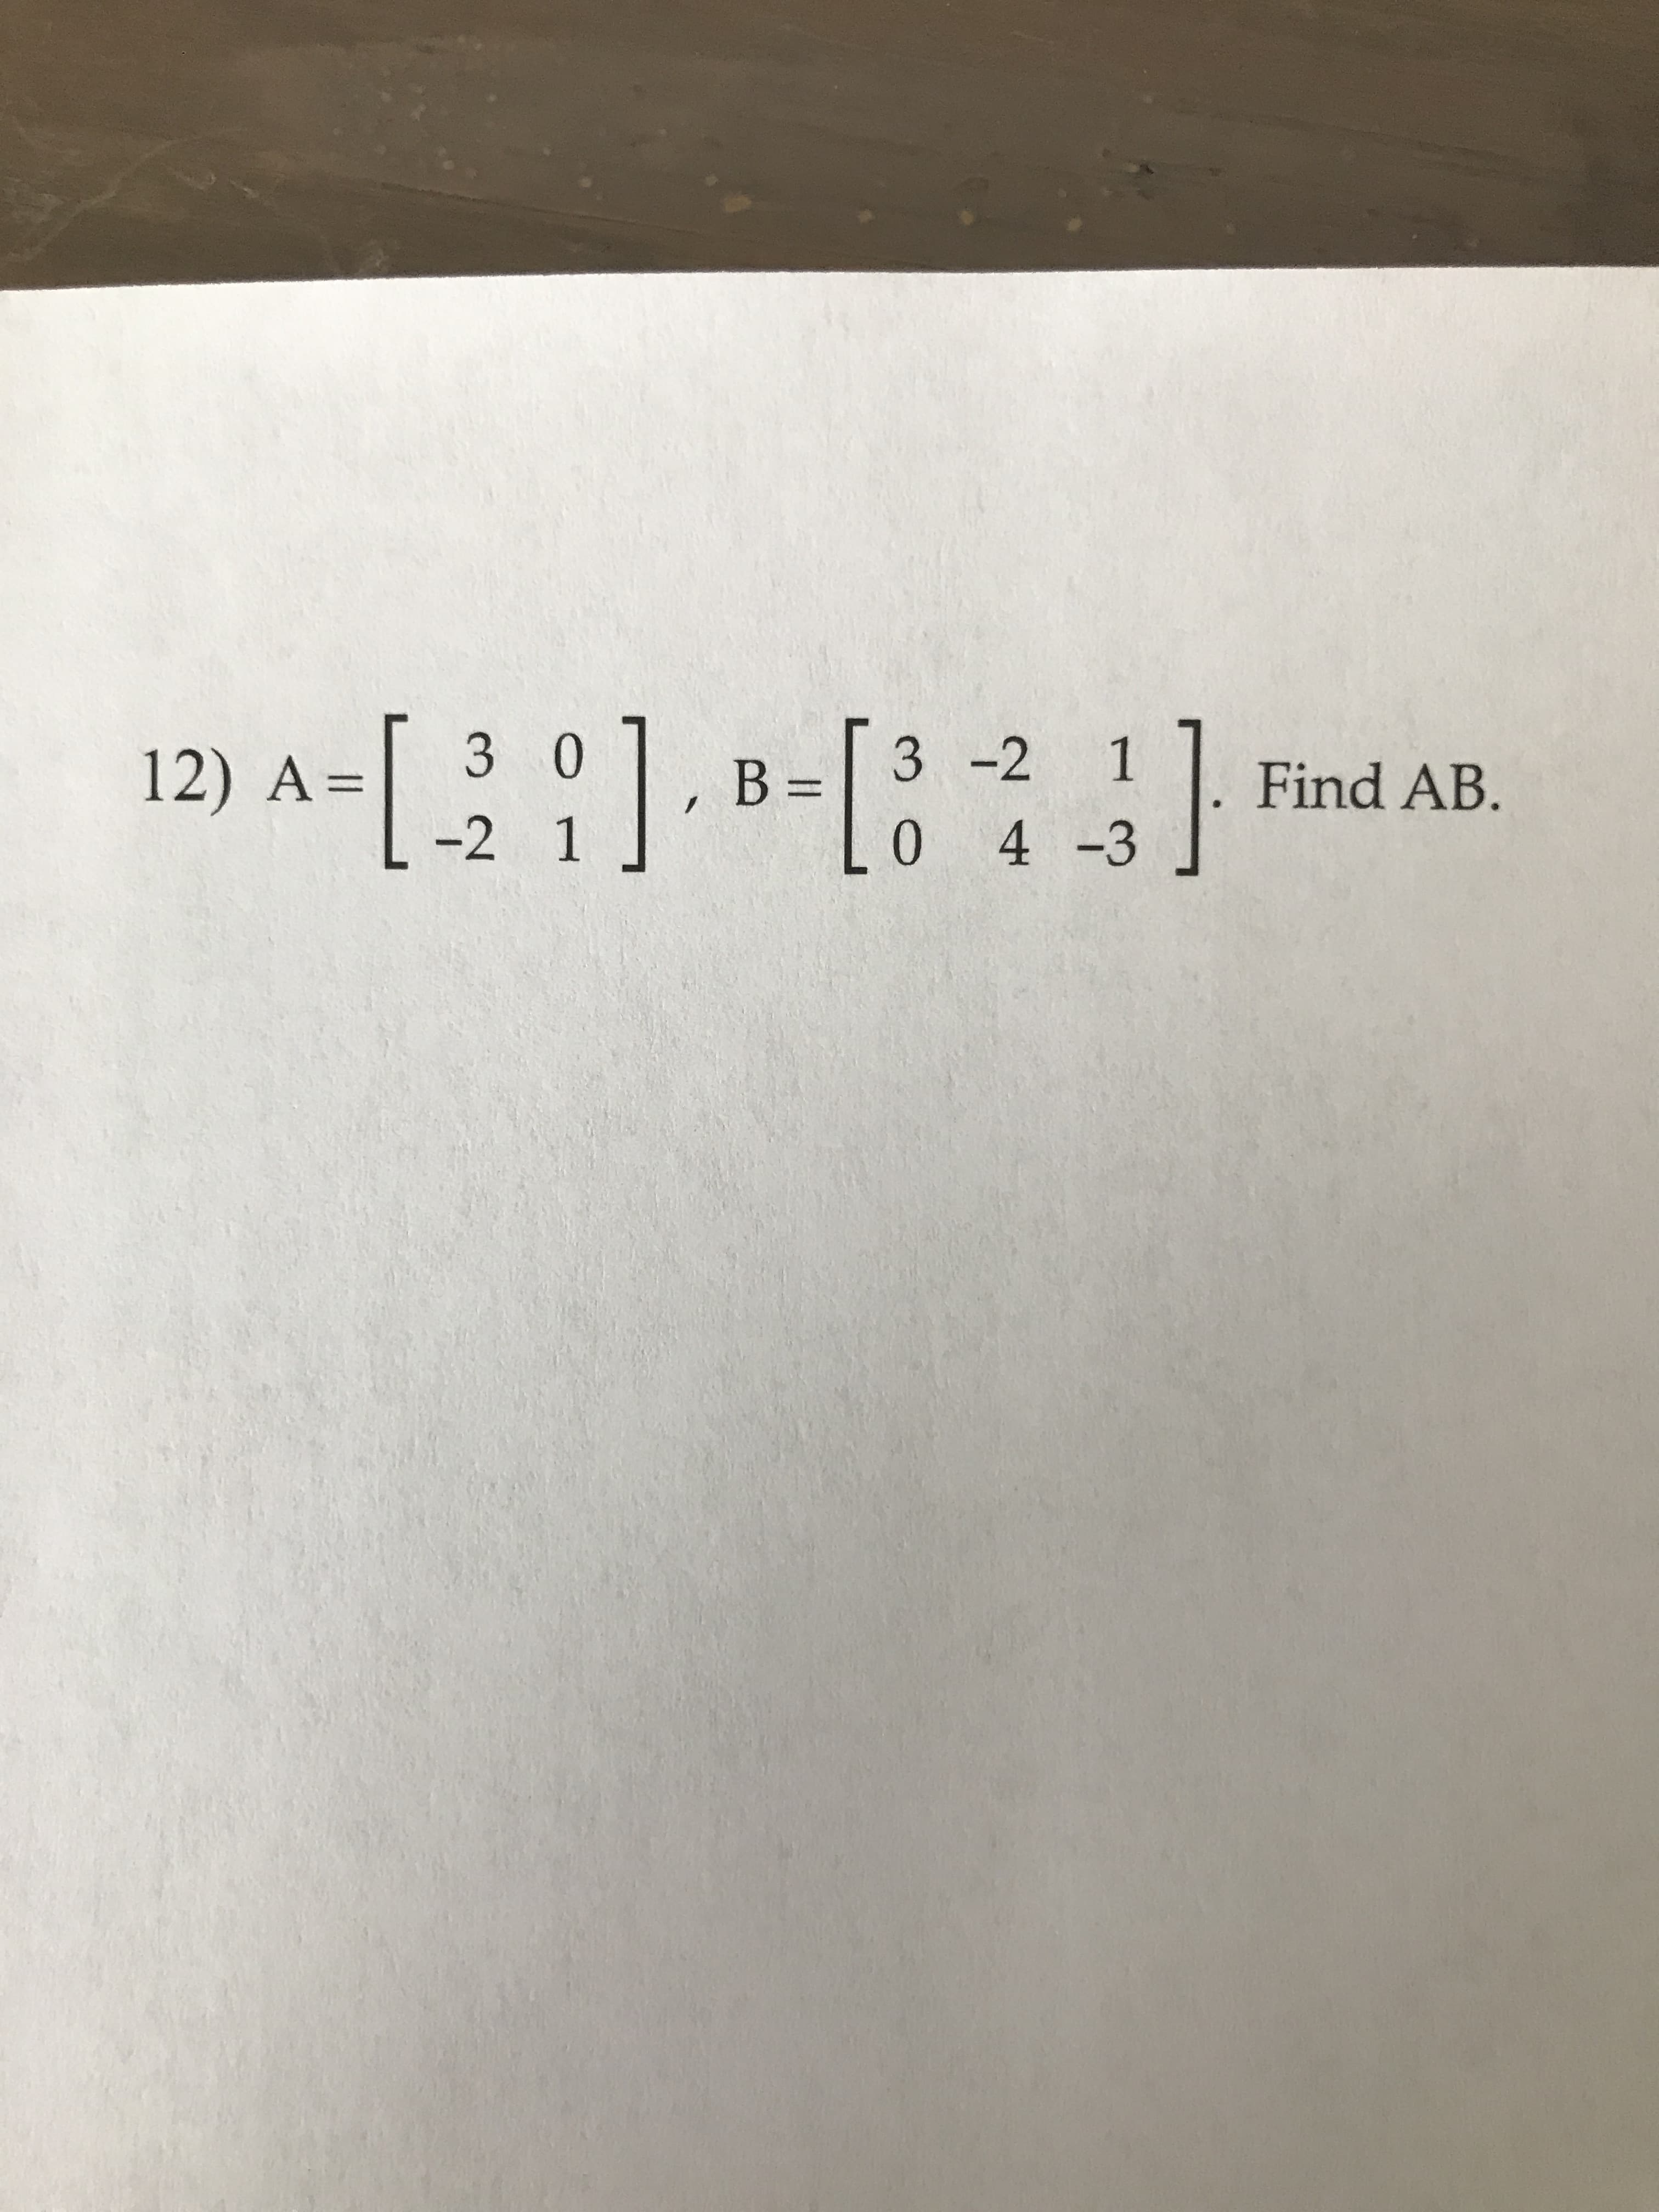 12) a-:]- B-[:: ind AR
3 0
3 -2 1
Find AB.
%3D
-2 1
0 4-3
